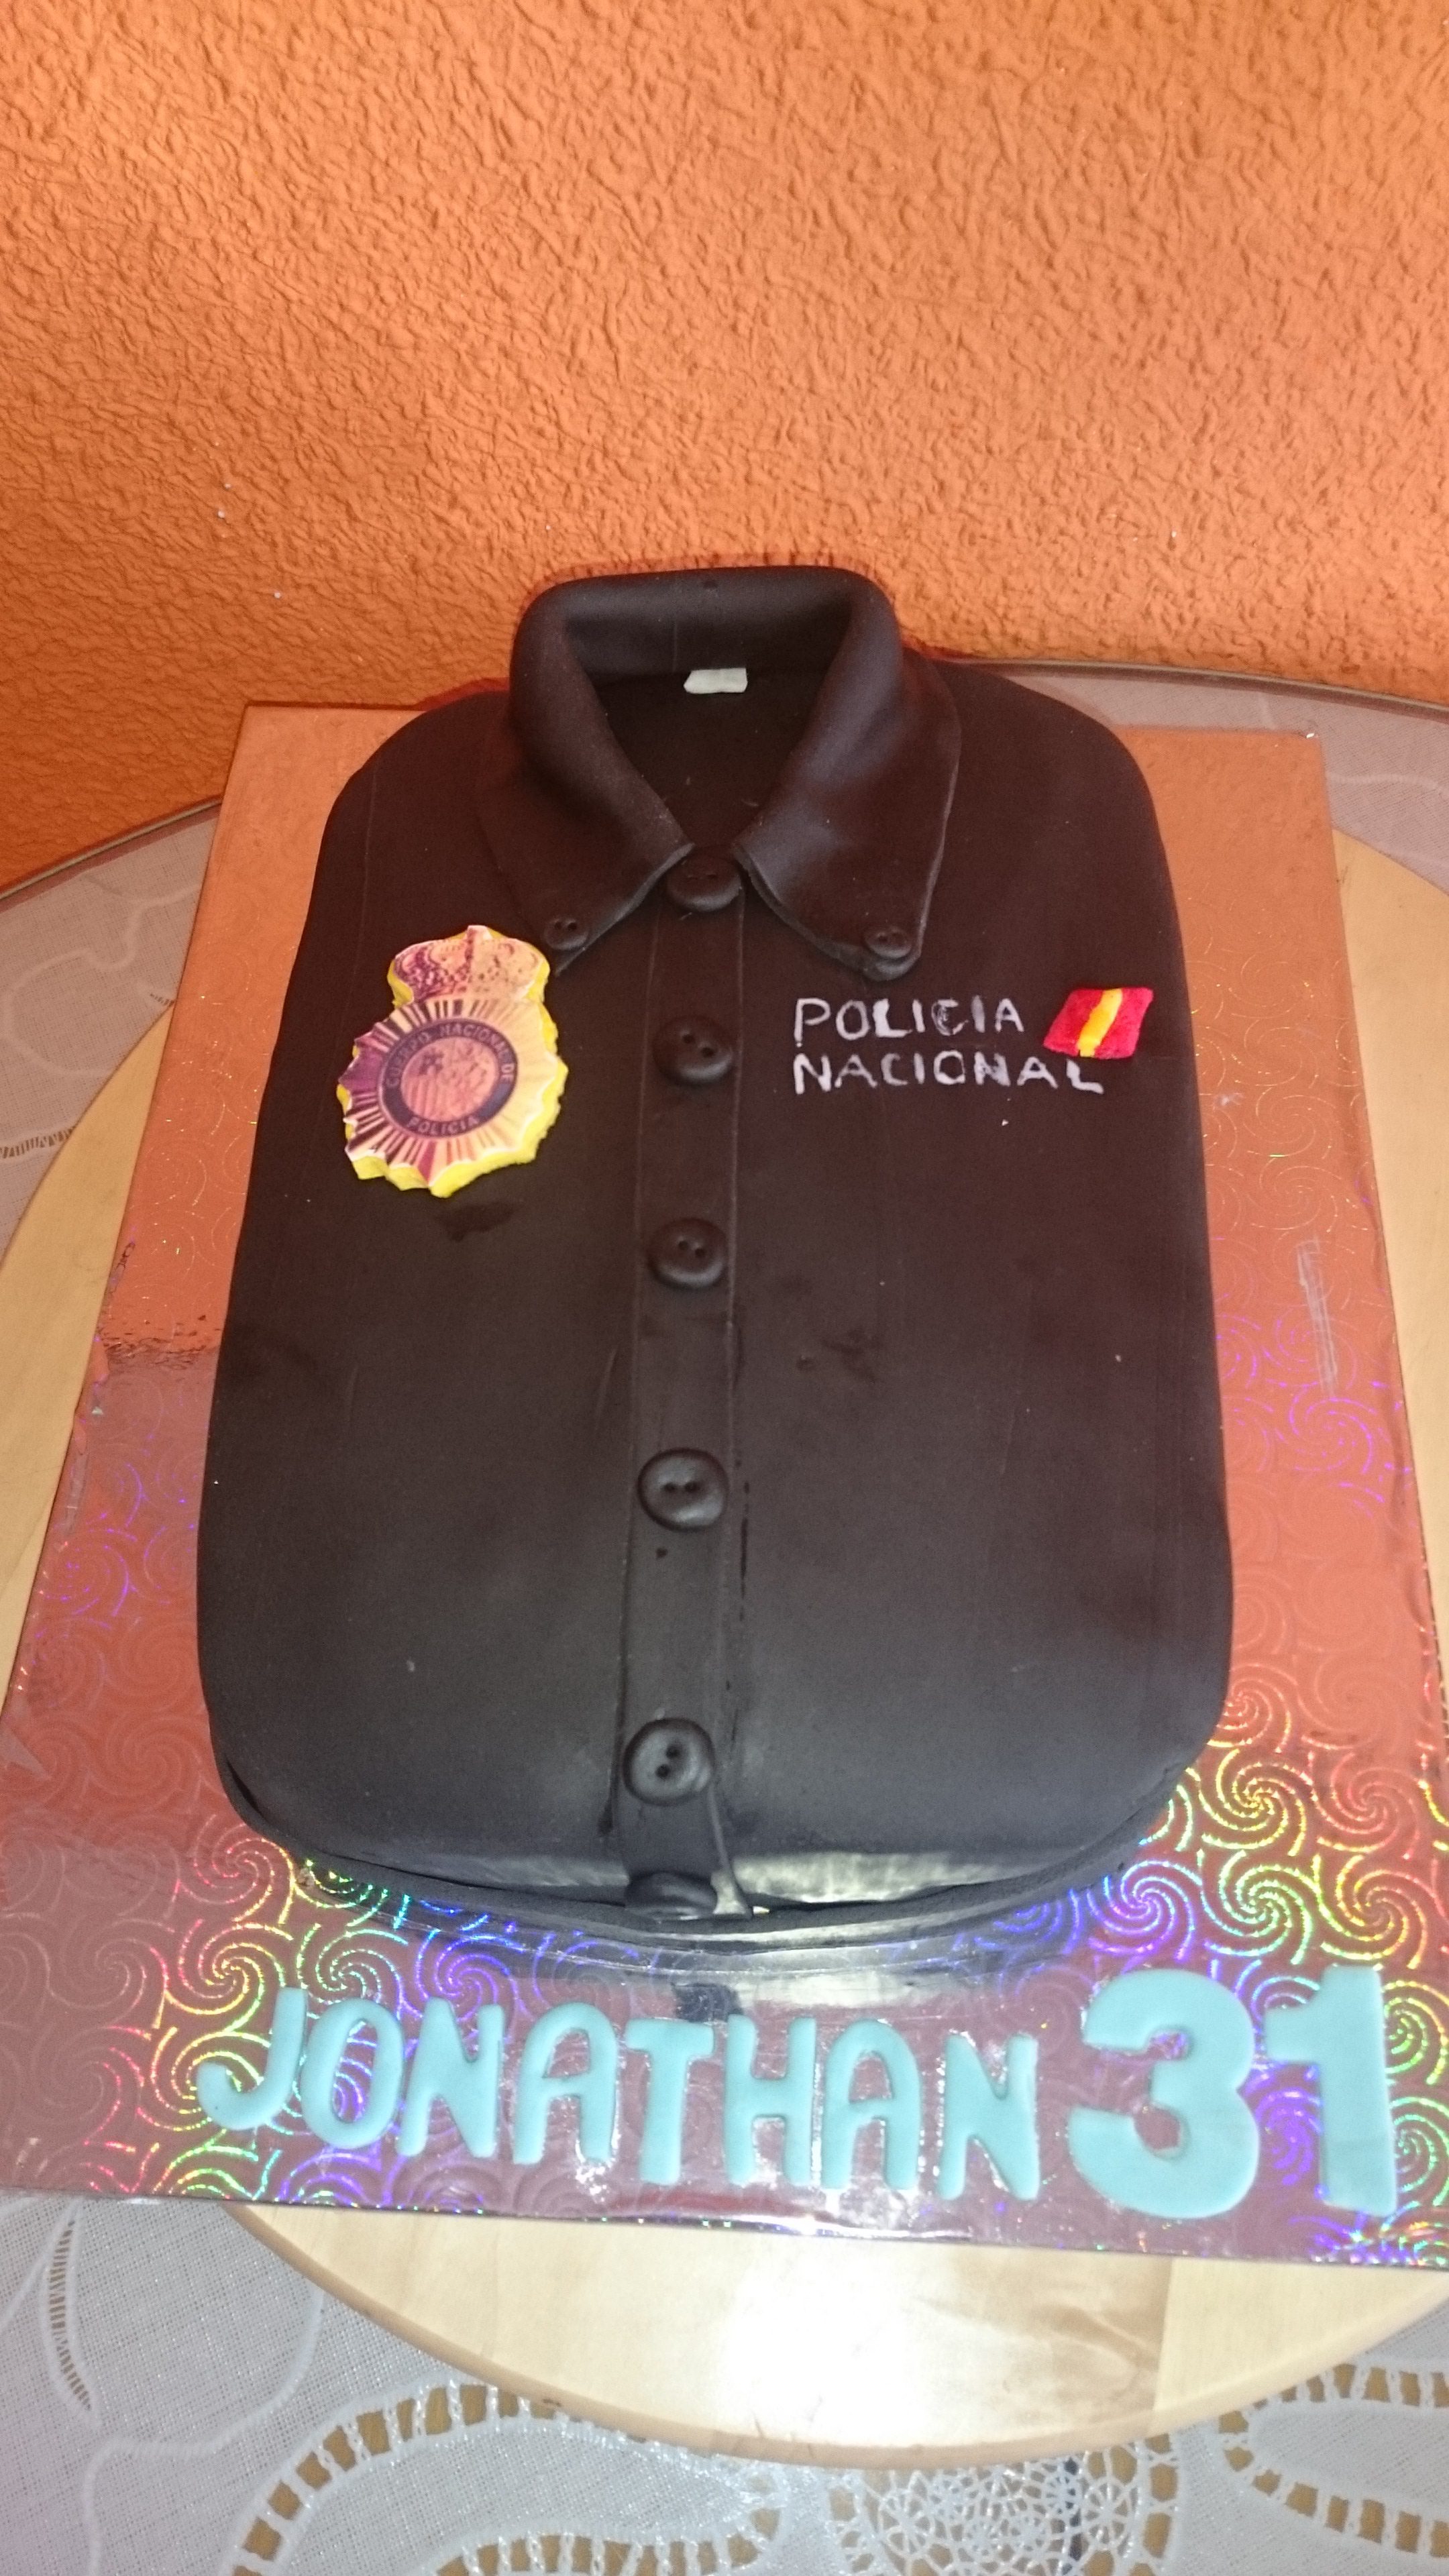 Tartas Fondant Madrid tartas personalizada para un Policia Nacional